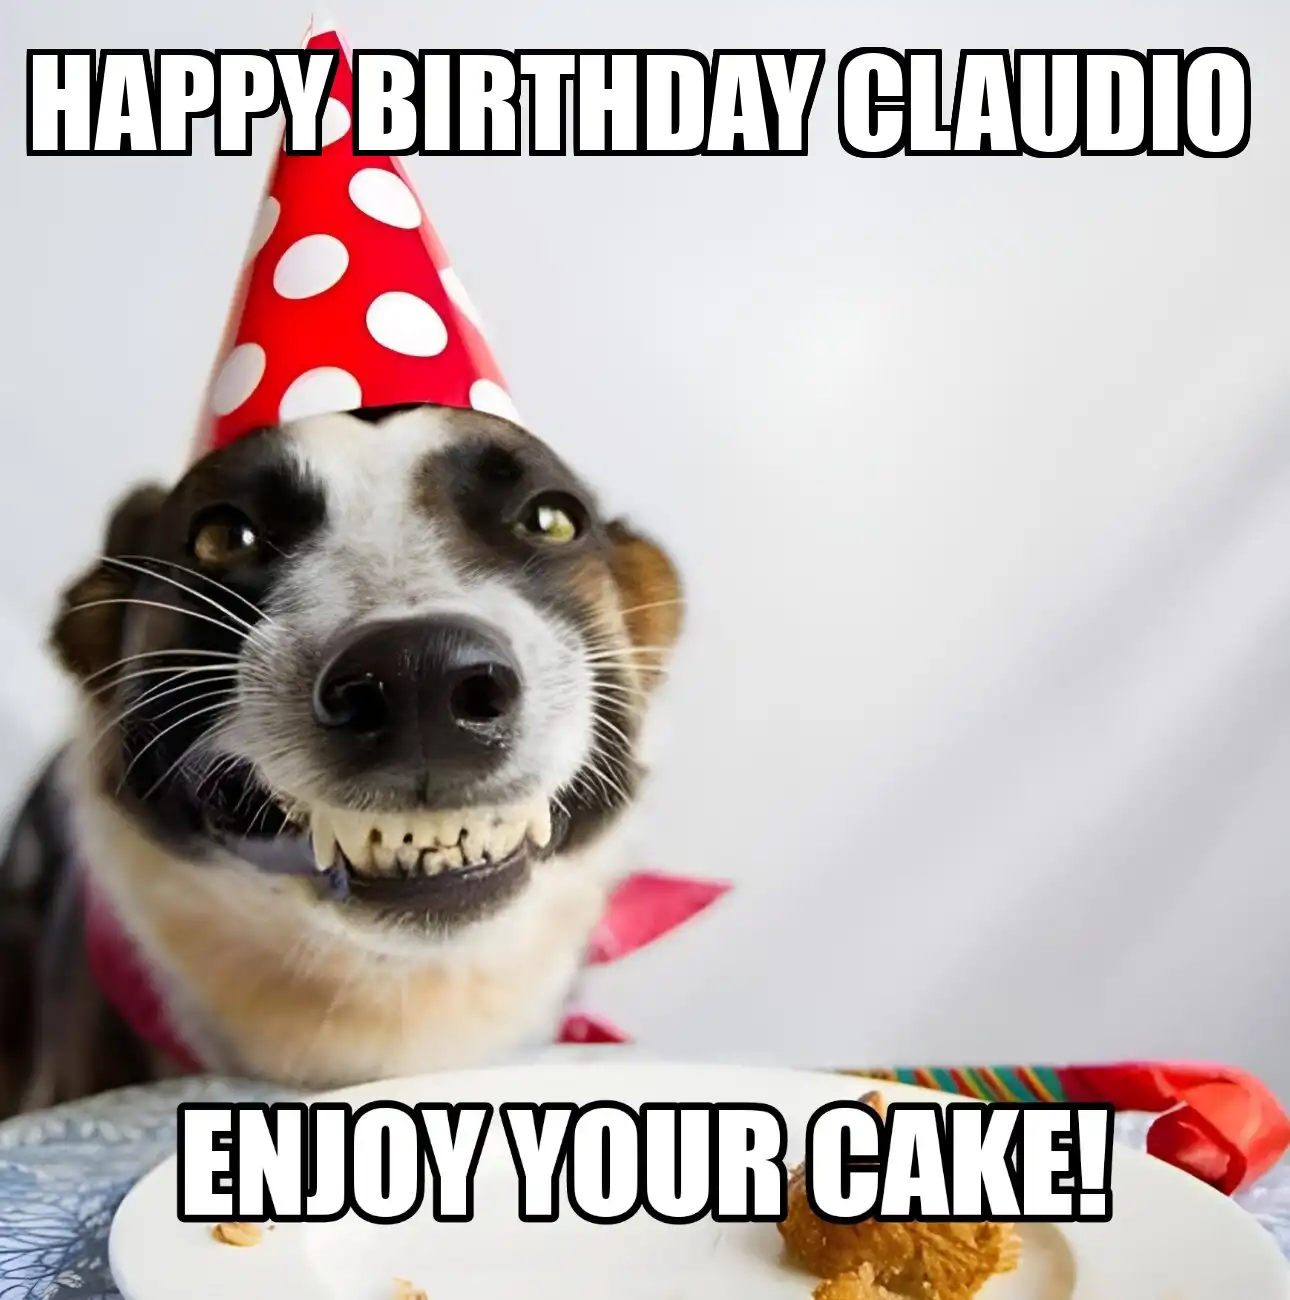 Happy Birthday Claudio Enjoy Your Cake Dog Meme